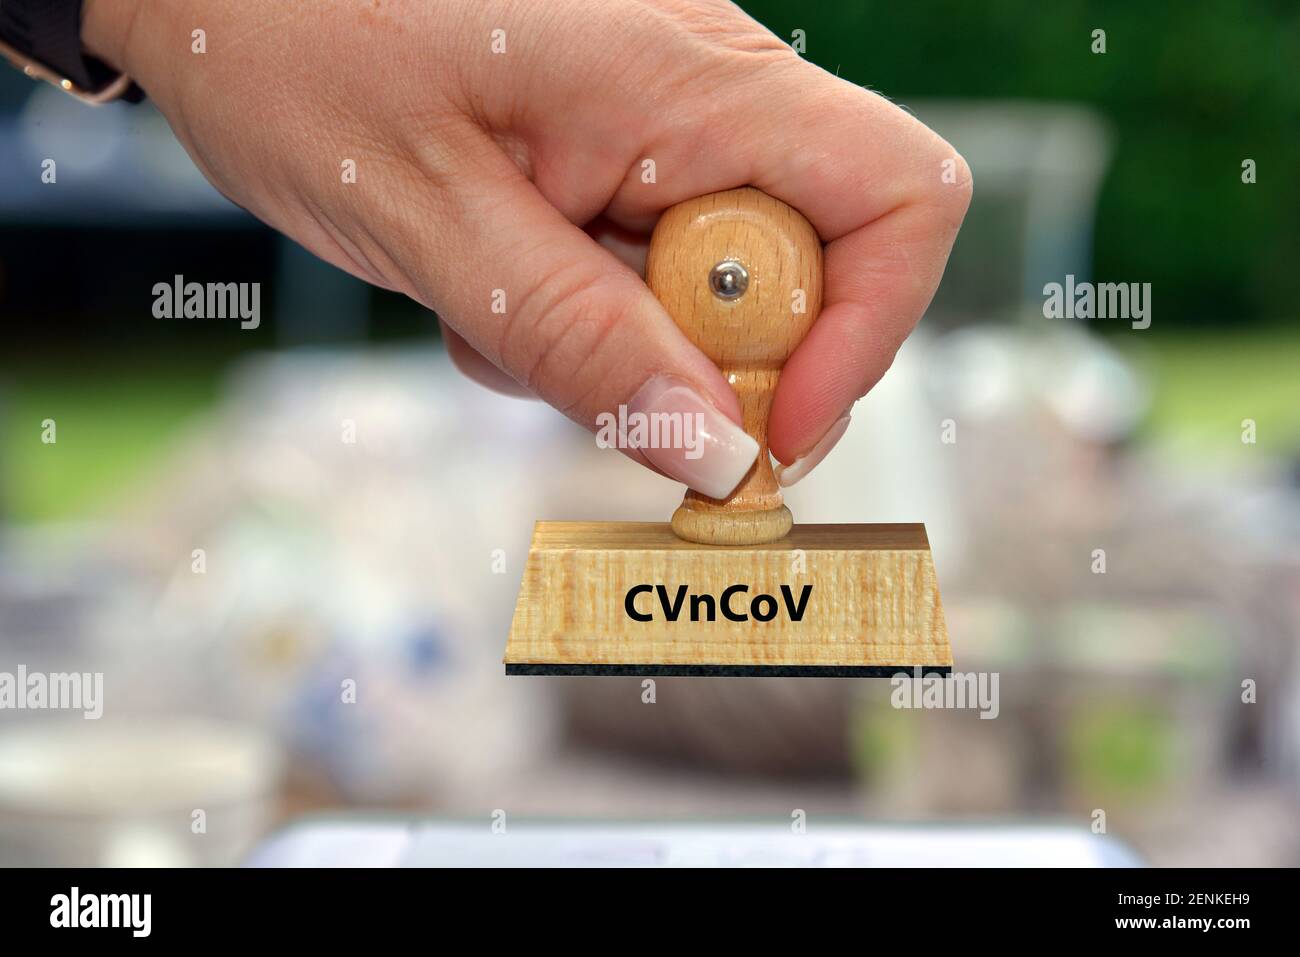 Stempel, Holzstempel, Aufschrift: CVnCoV, CureVac, Impfstoffhersteller, Impfstoff, Pharmaunternehmen, Covid-19 Impfstoff, Forschung, mRNA-Impfstoff, Stock Photo